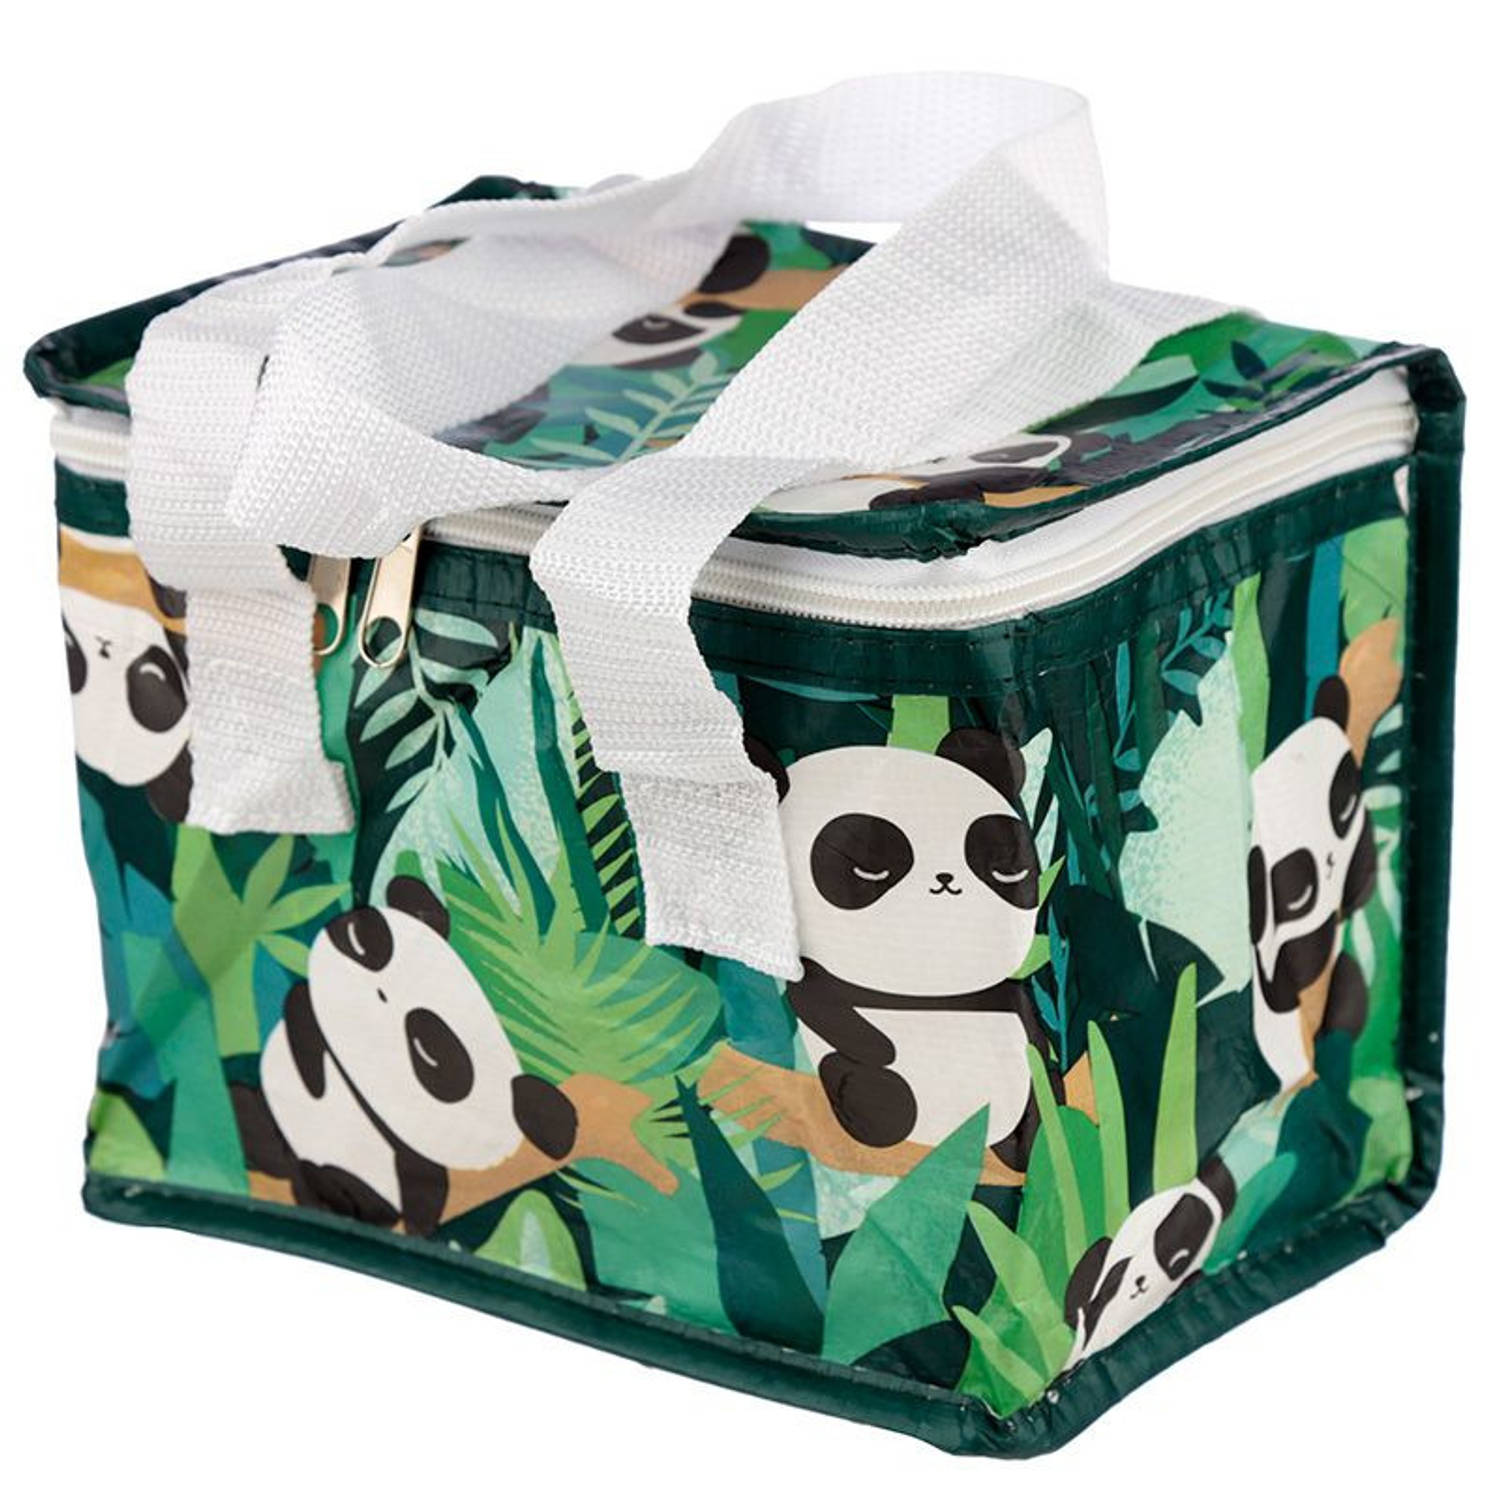 Kleine koelbox/koeltas panda print groen 4 liter - Koeltas